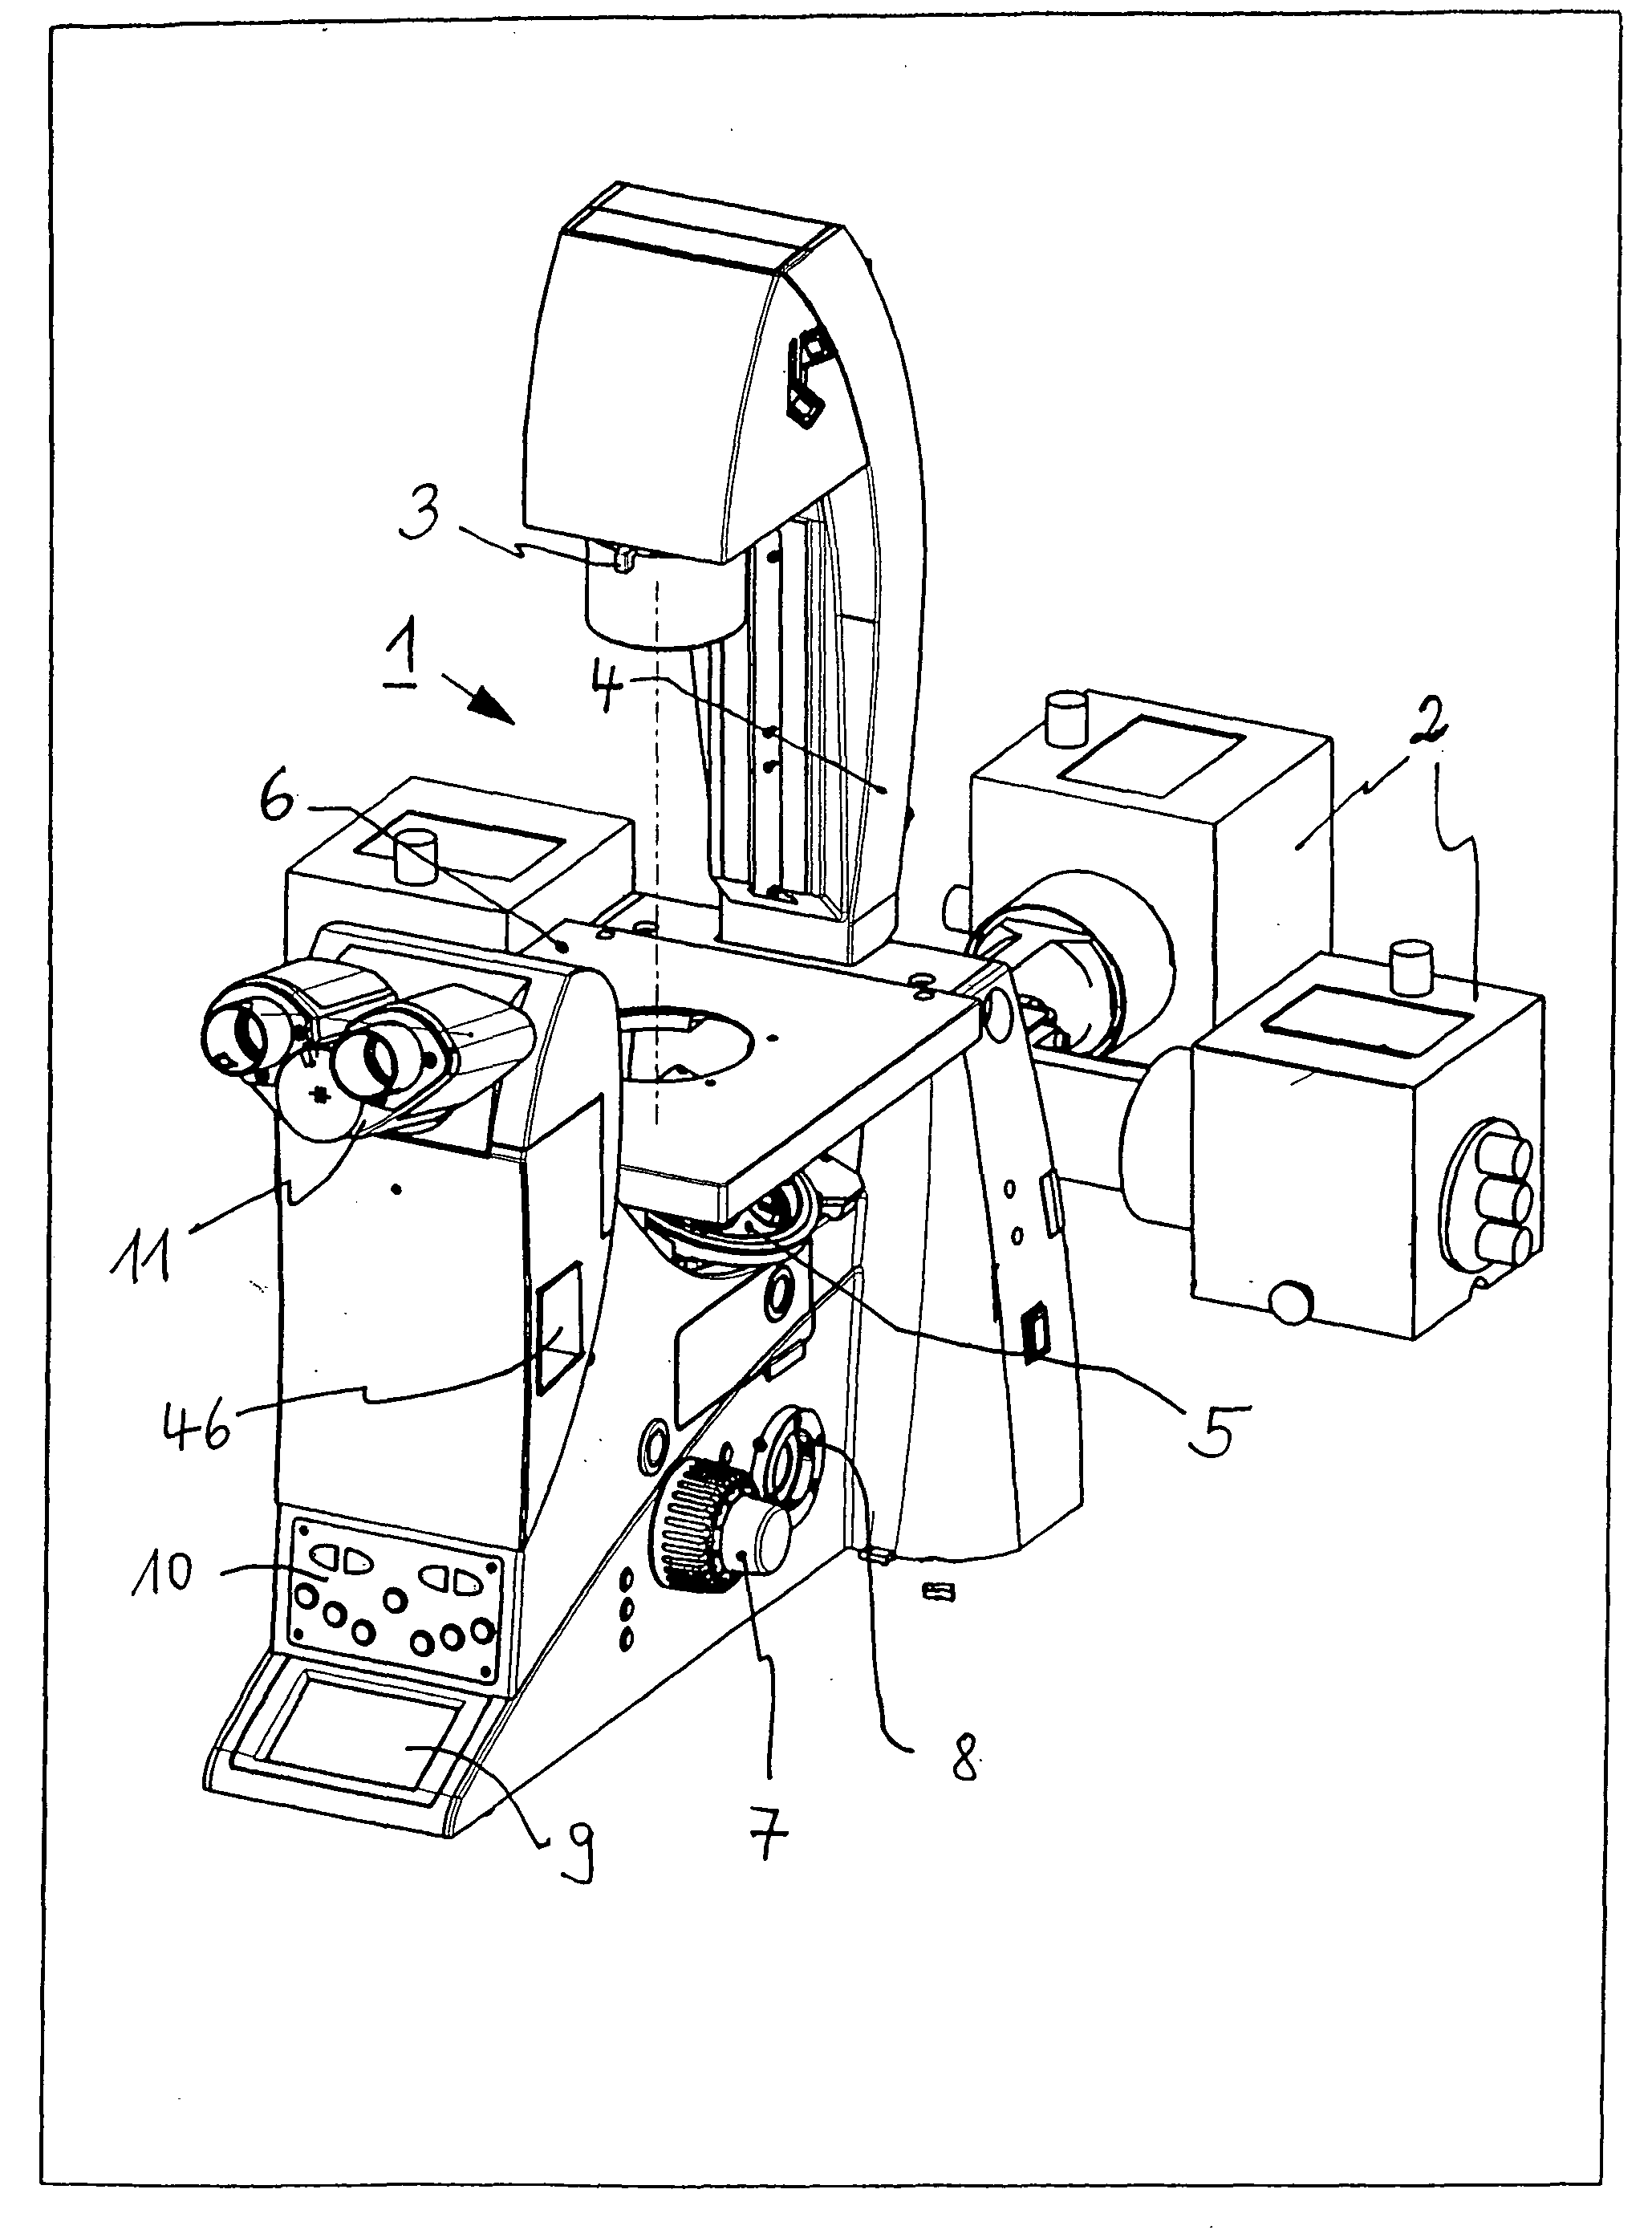 Inverted microscope